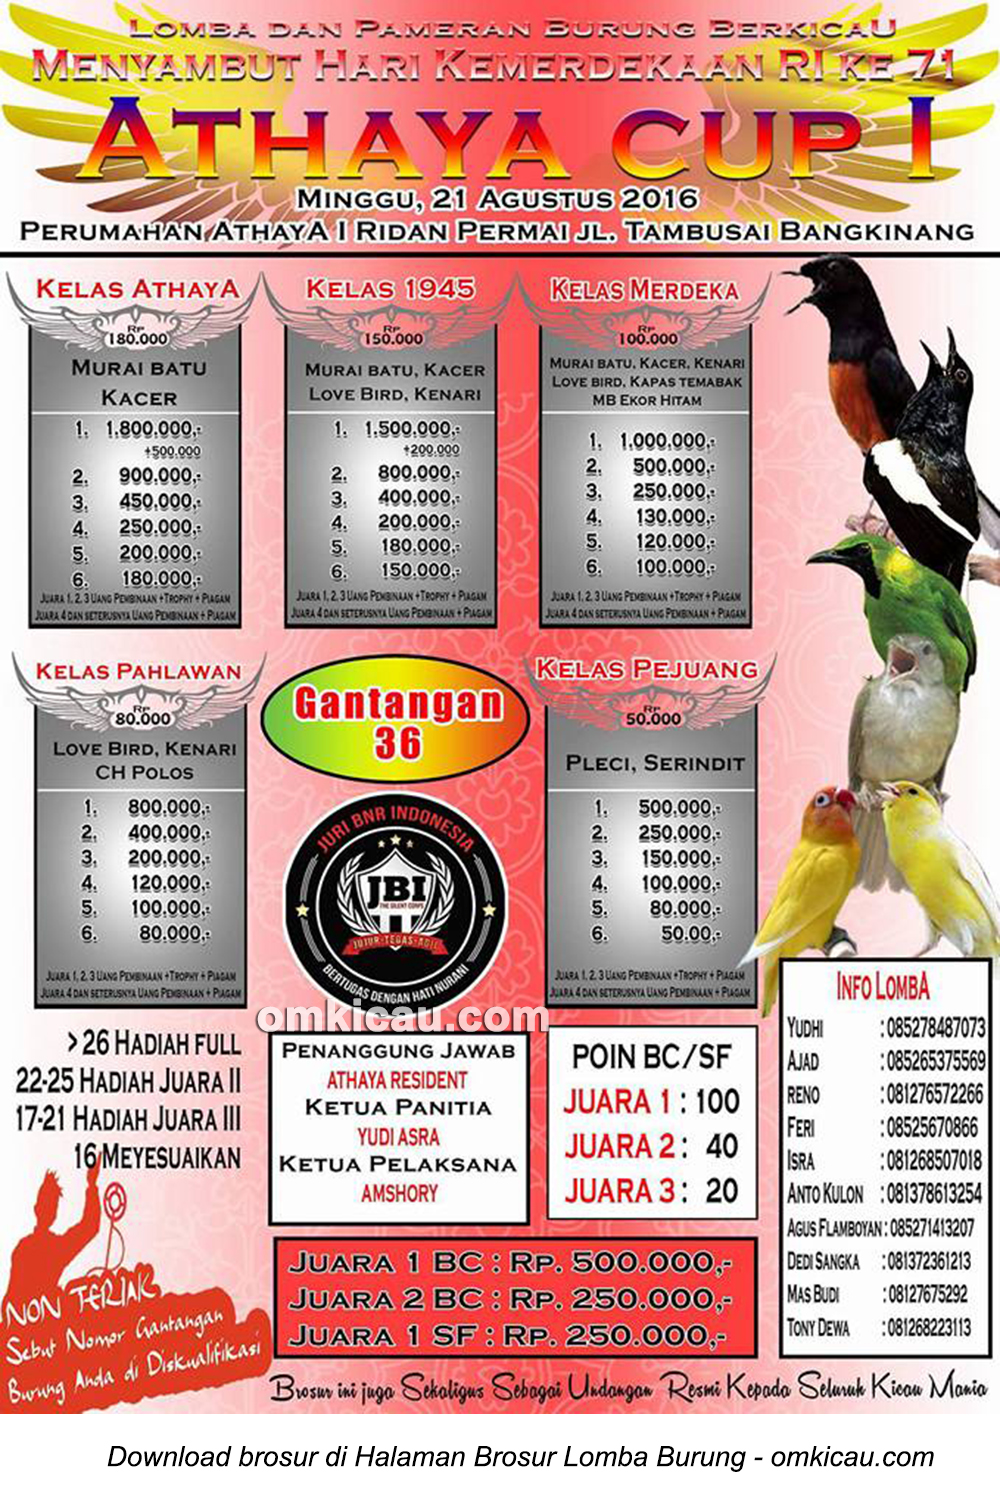 Brosur Lomba Burung Berkicau Athaya Cup I, Bangkinang, 21 Agustus 2016